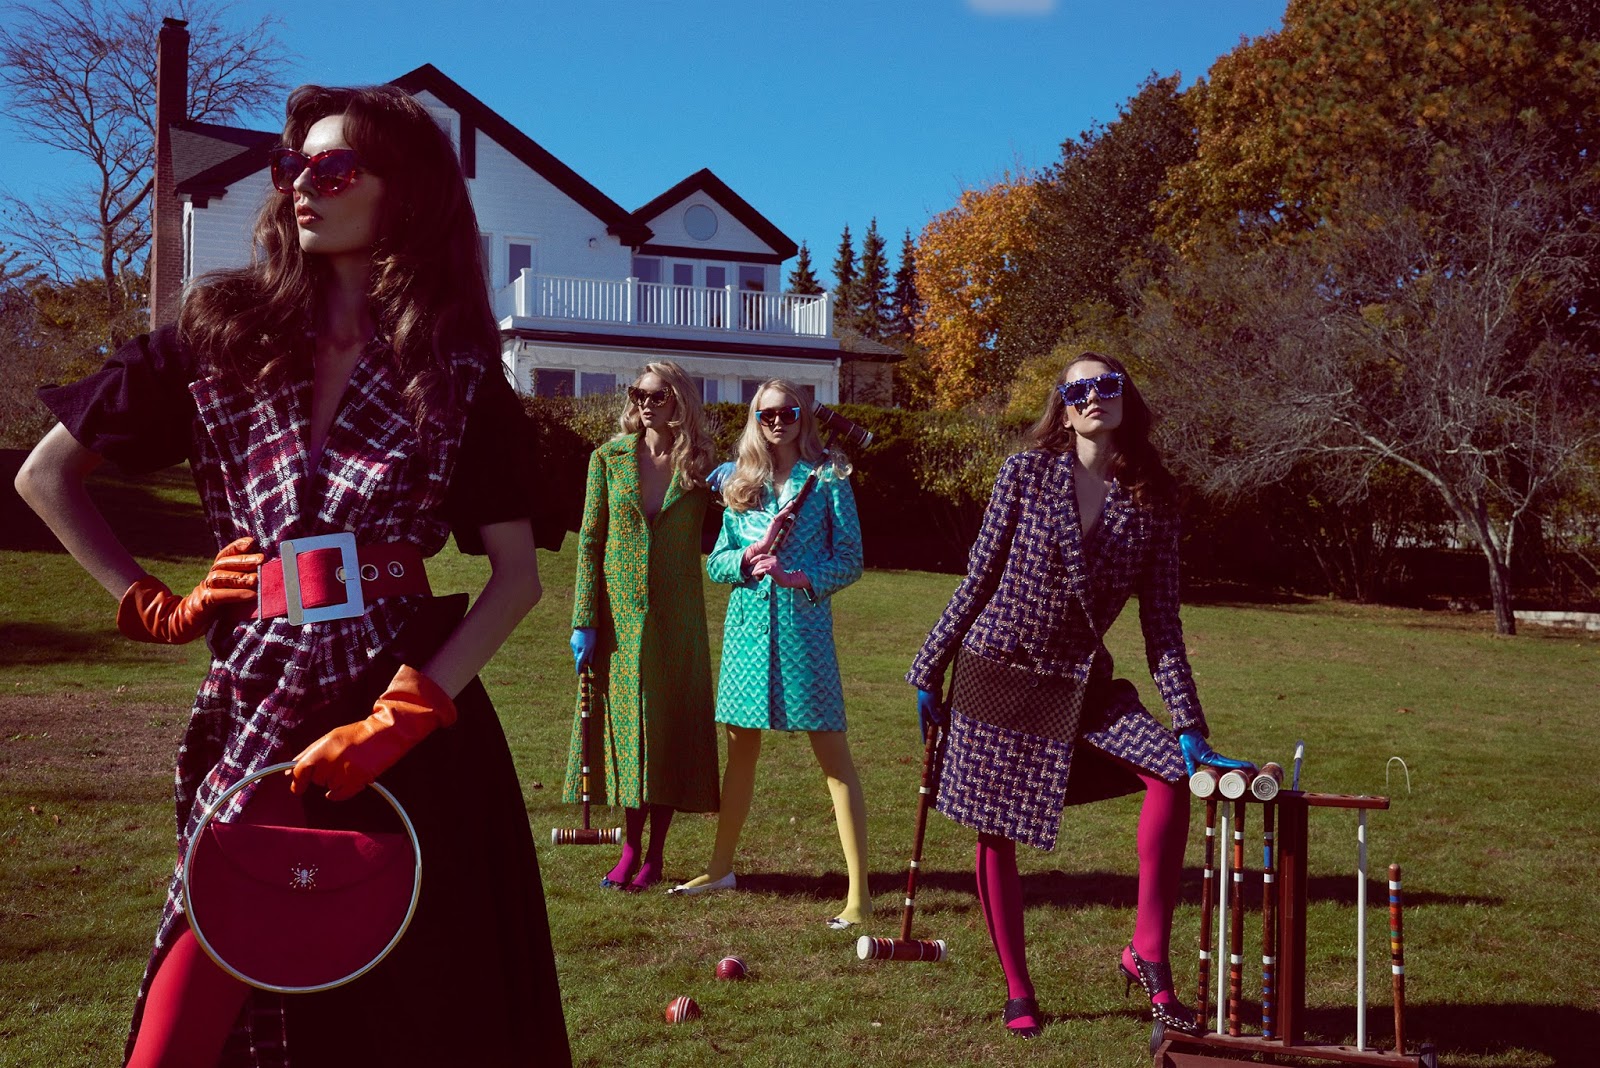 Heathers Movie Themed Fashion Editorial, Hamptons Mansion with model Yulia  Ermakova